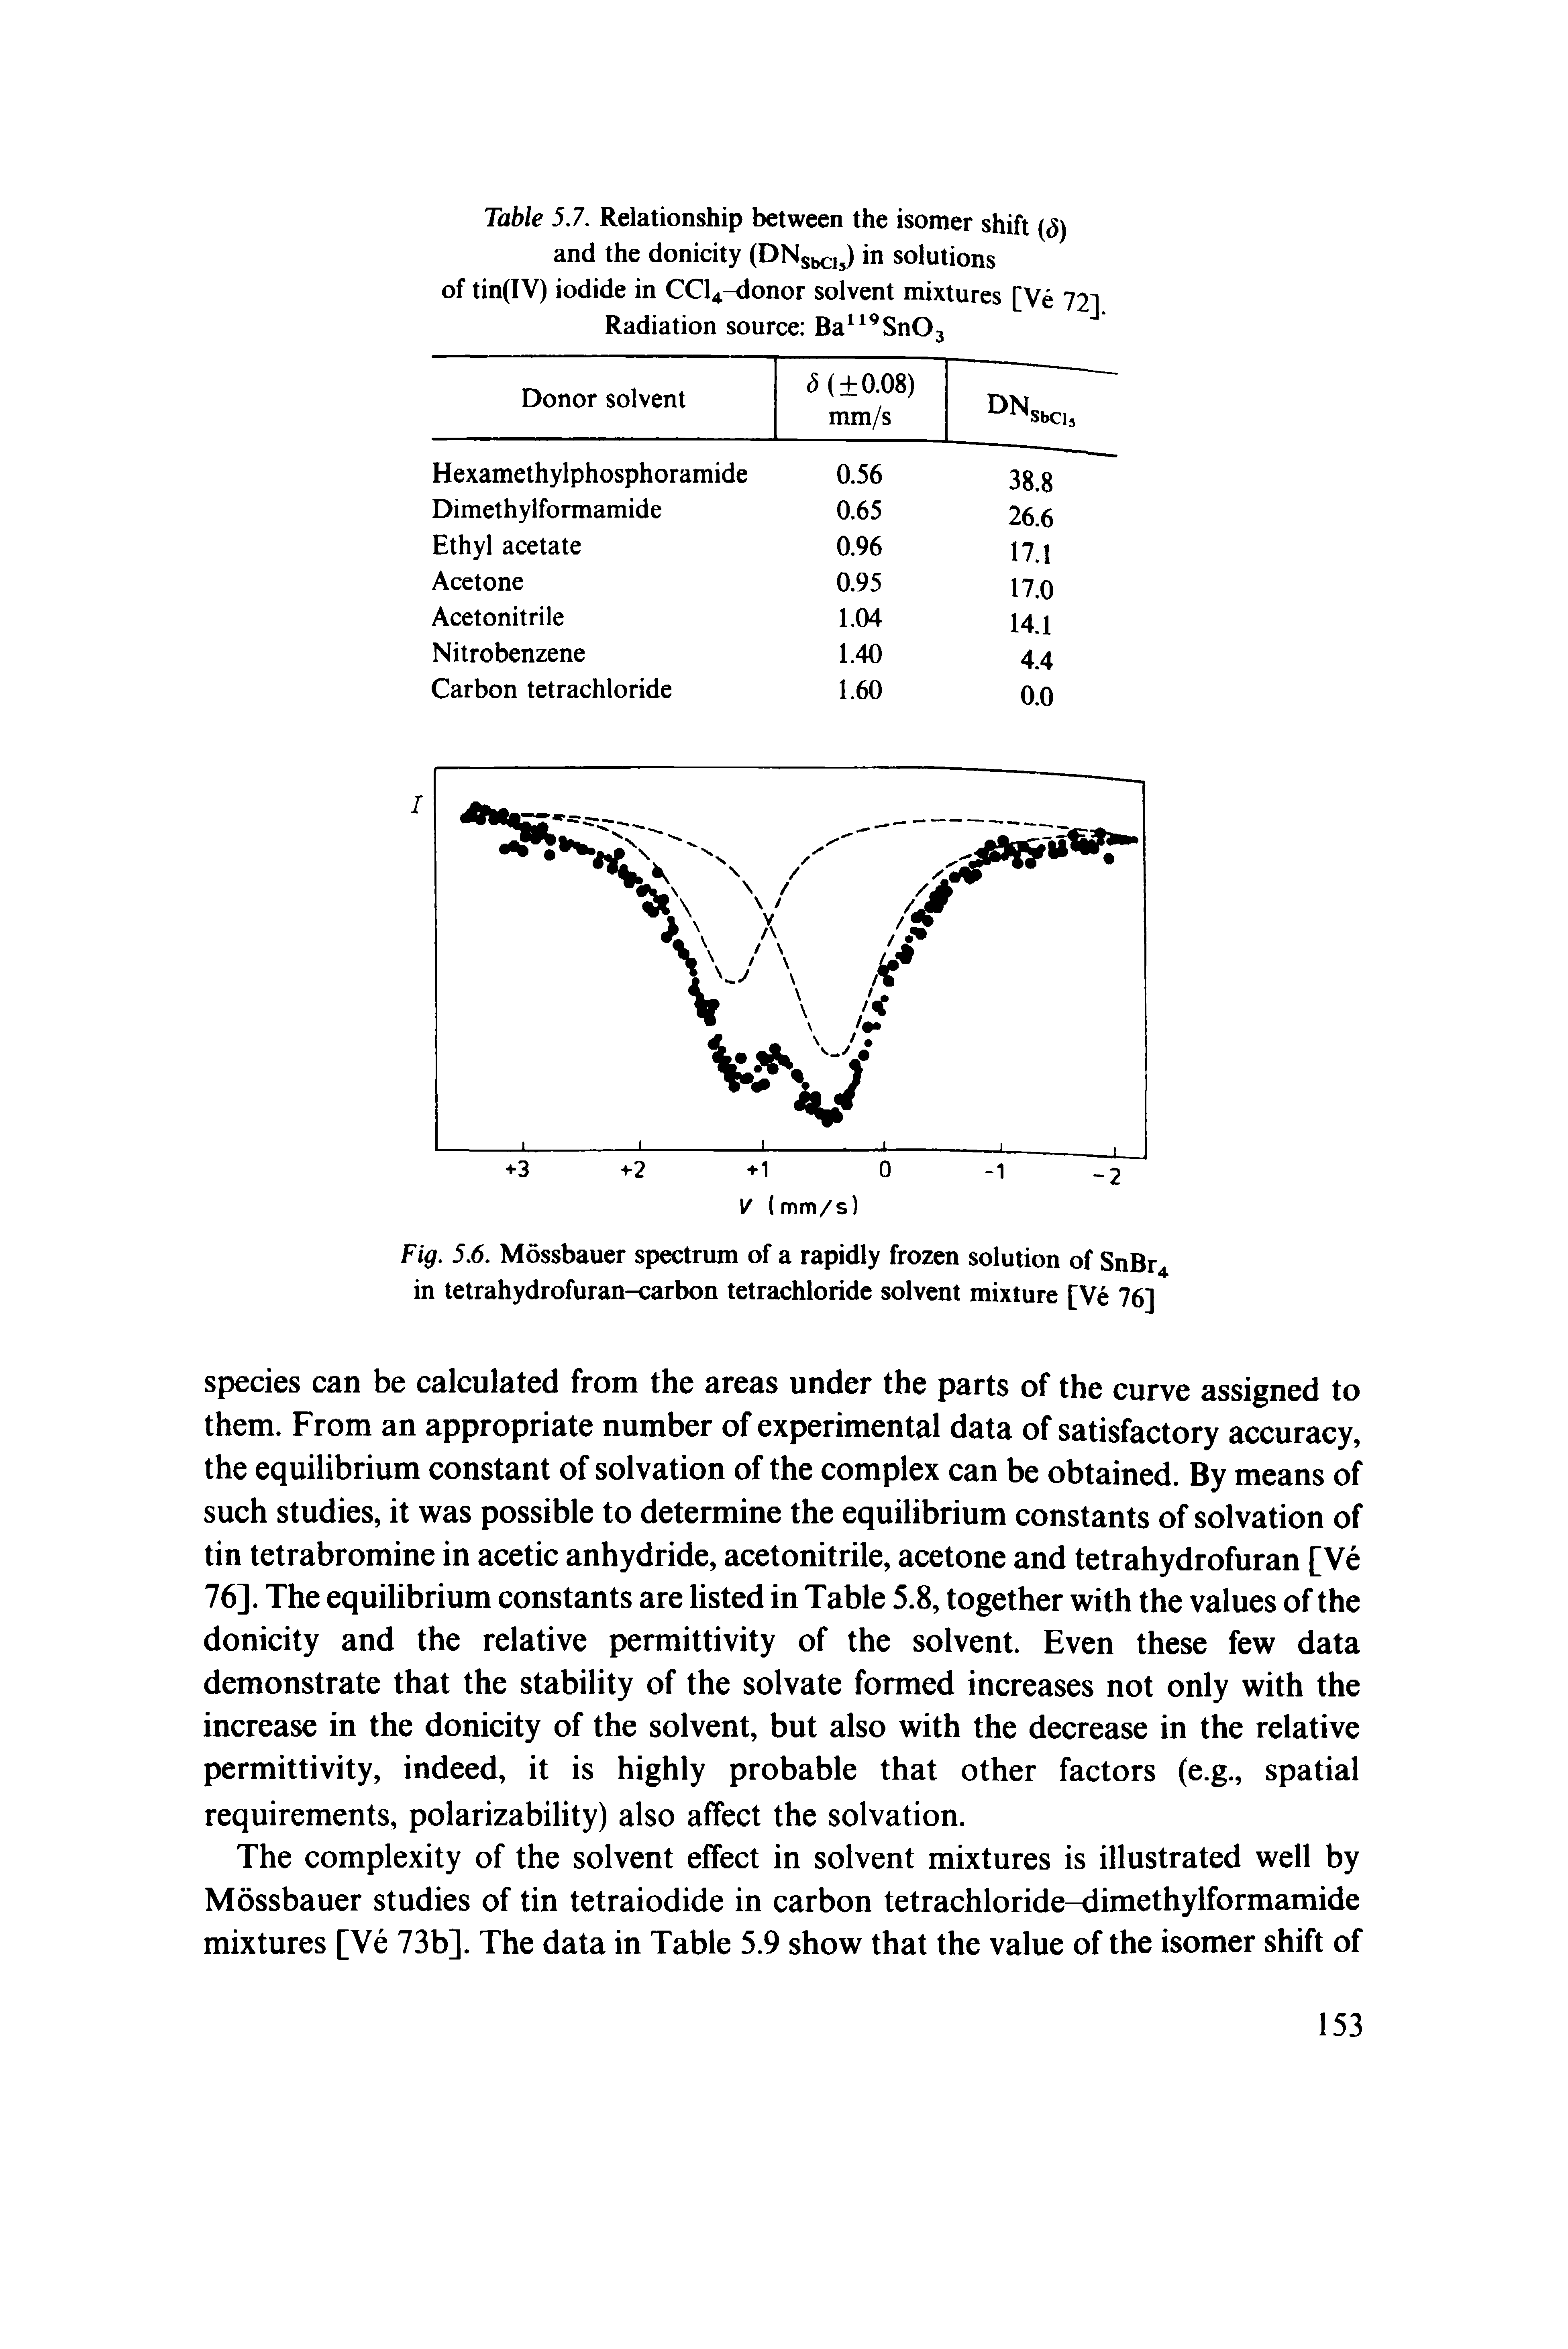 Fig. 5.6. Mossbauer spectrum of a rapidly frozen solution of SnBr4 in tetrahydrofuran-carbon tetrachloride solvent mixture [Ve 76]...